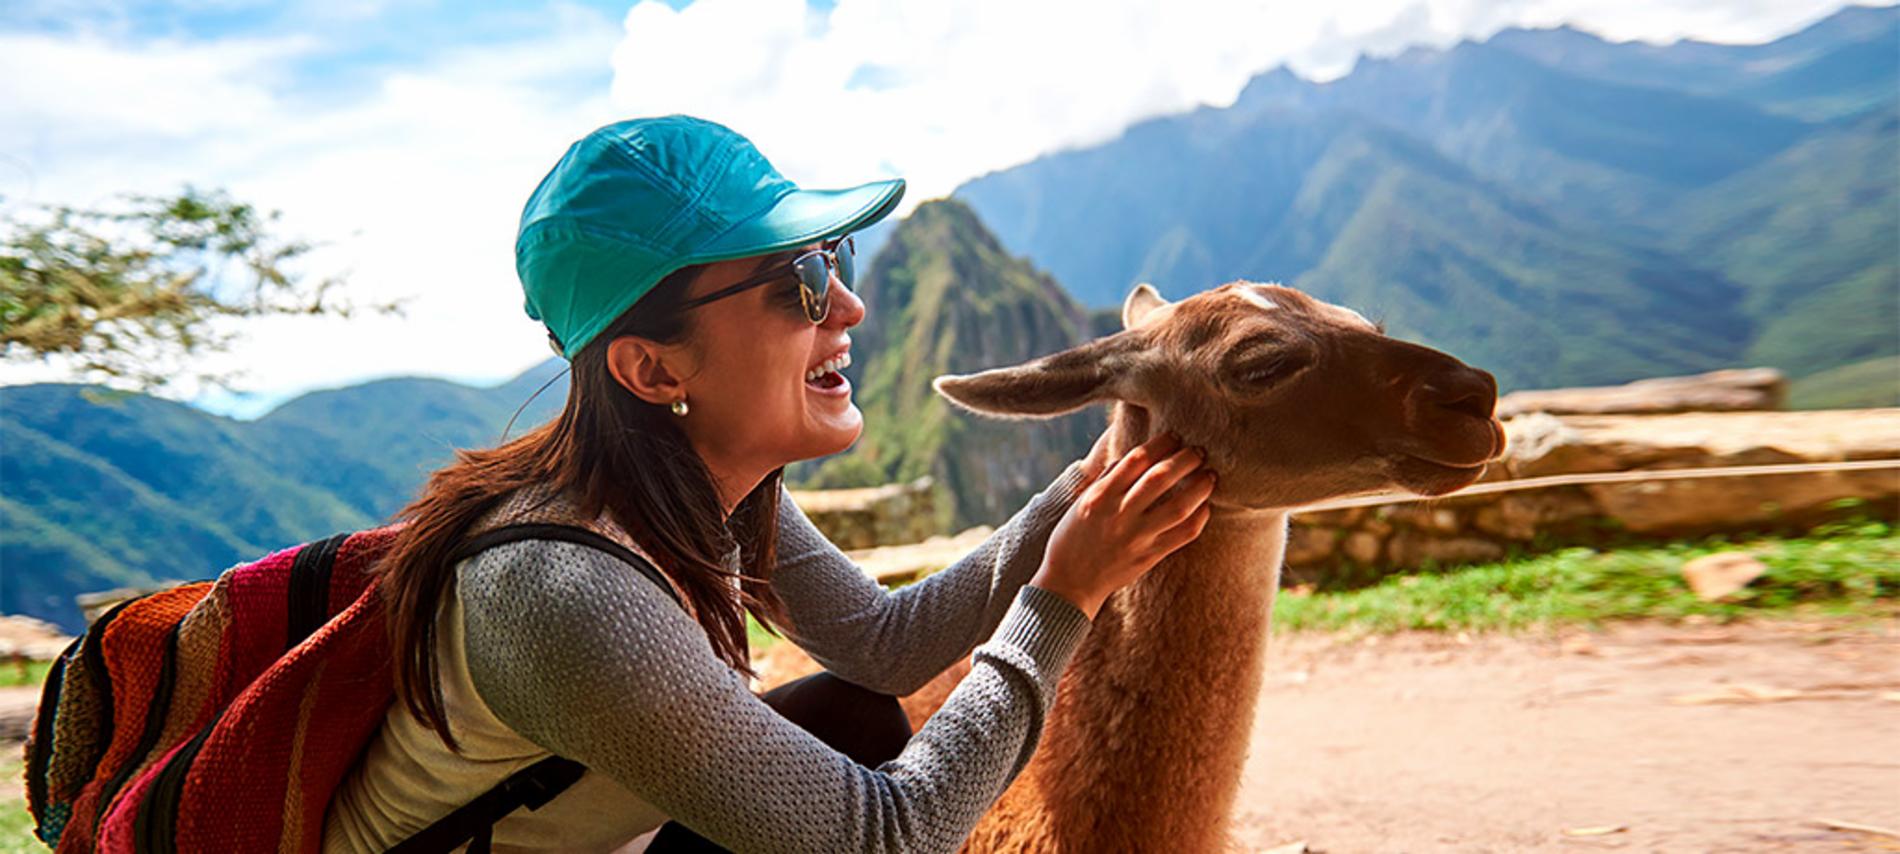 Consejos para que tu viaje a Machu Picchu sea inolvidable